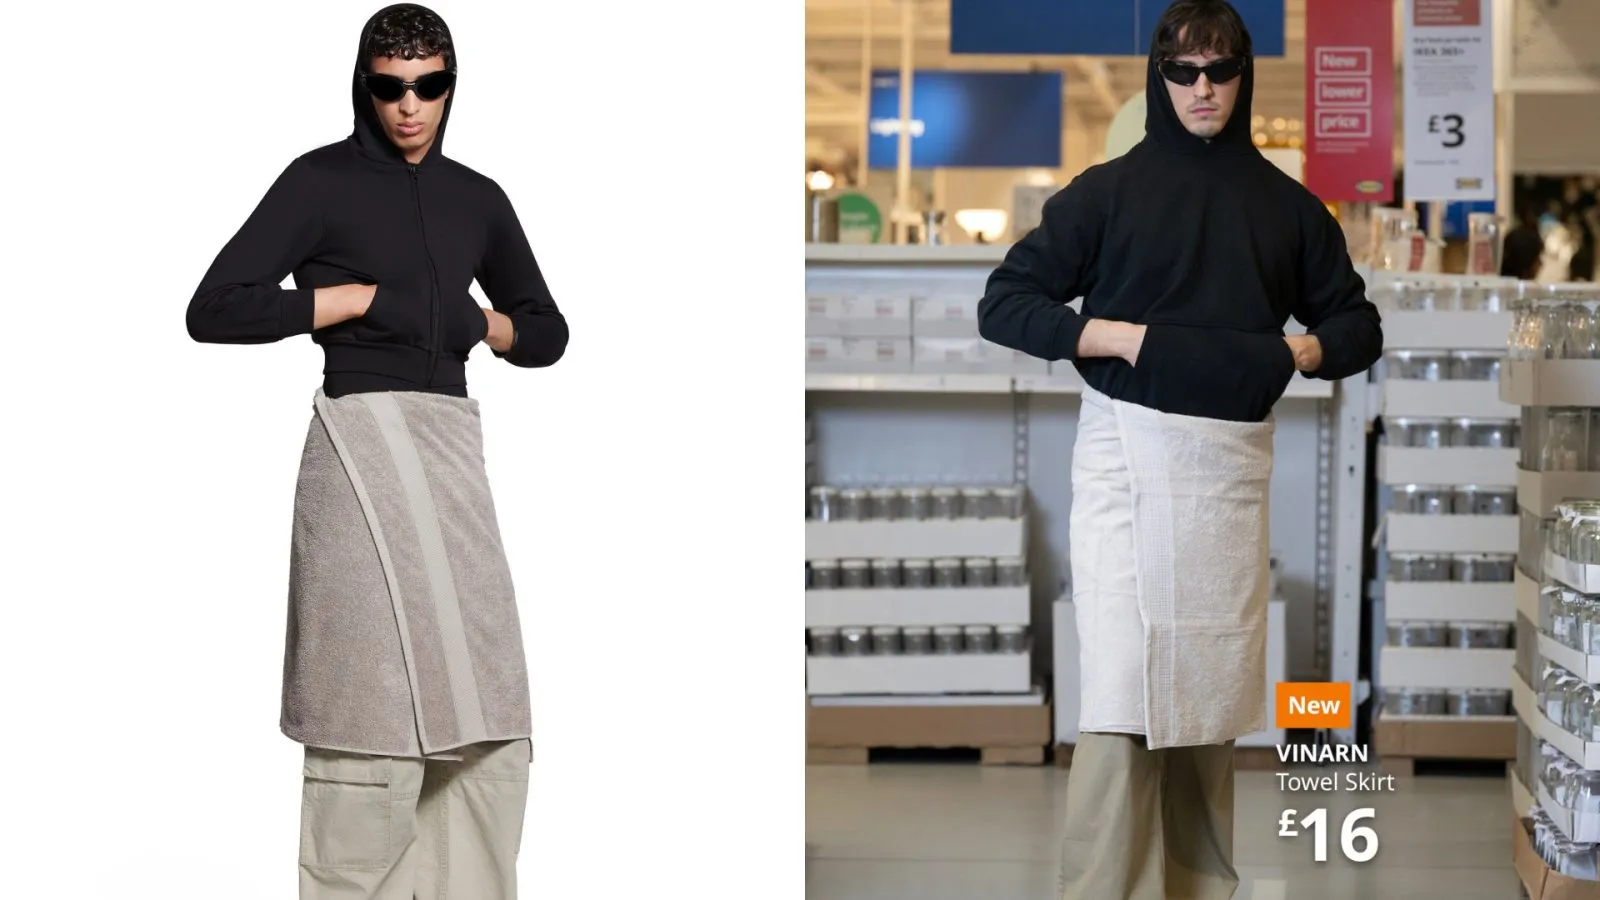 IKEA Trolls Balenciaga After Brand Debuts $925 Towel Skirt, Shares $17 Dupe